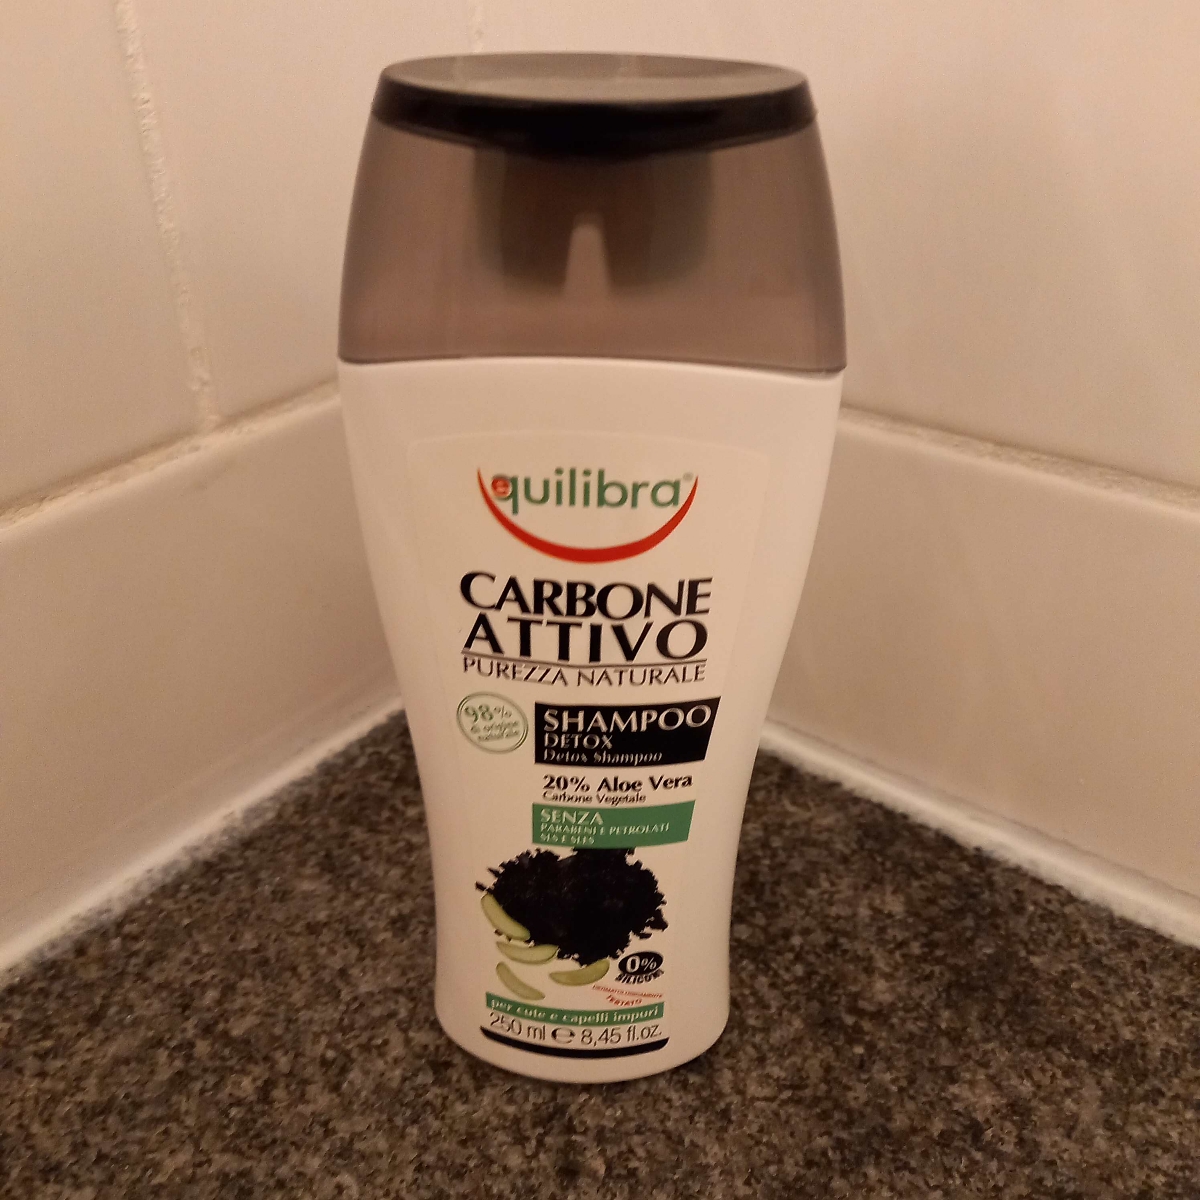 Equilibra Shampoo al Carbone attivo detox Review | abillion